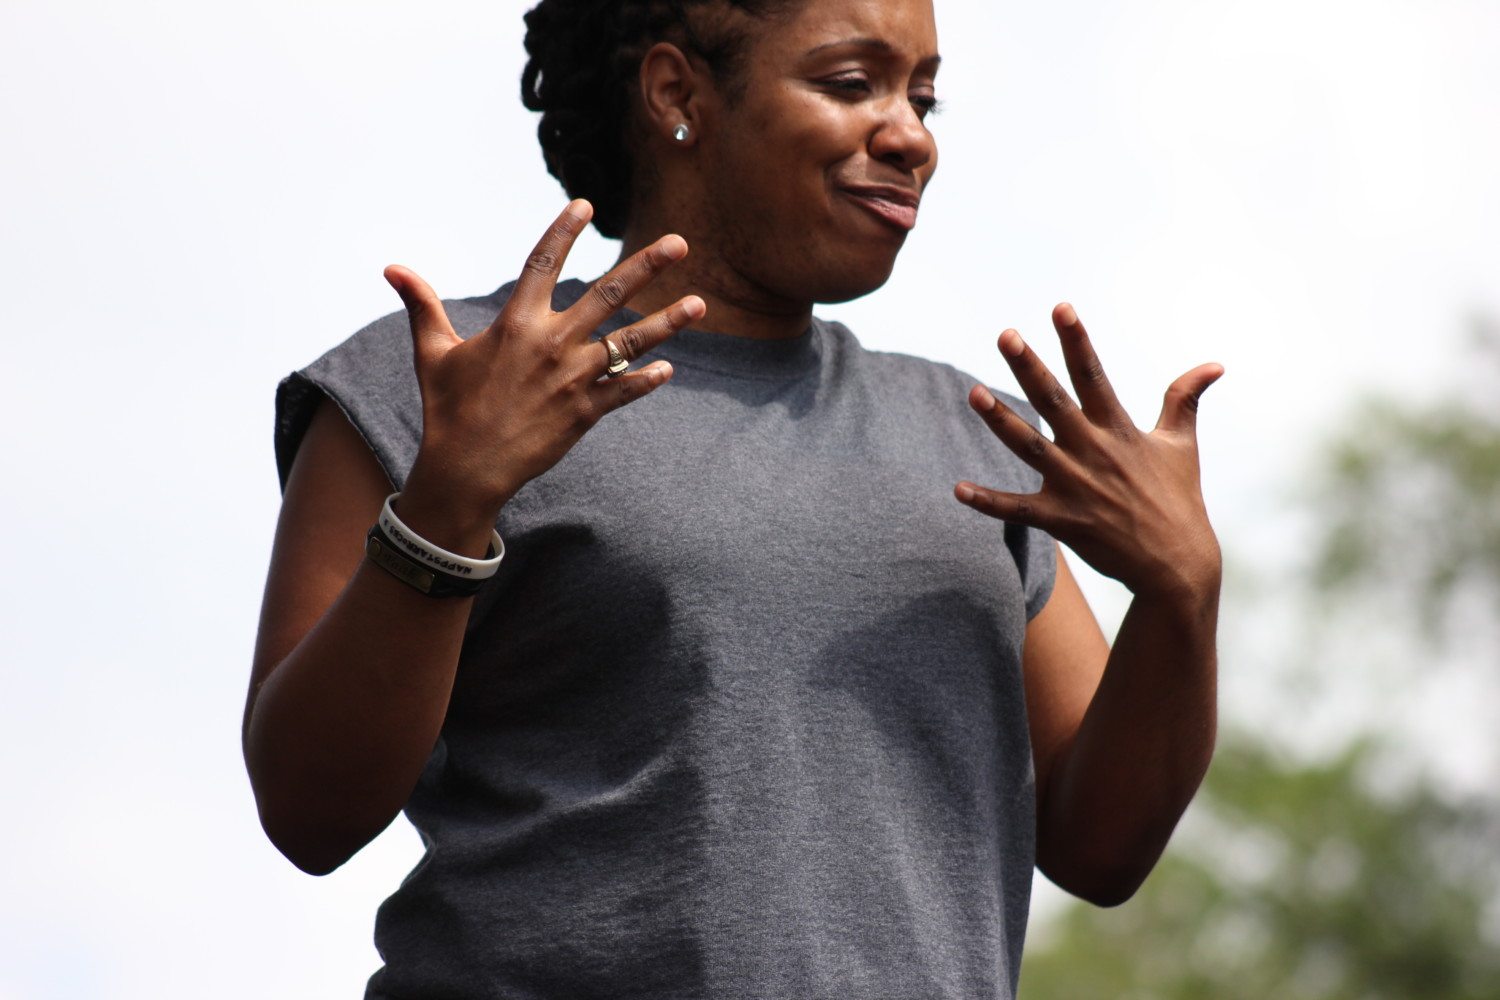 sign language interpreter photo